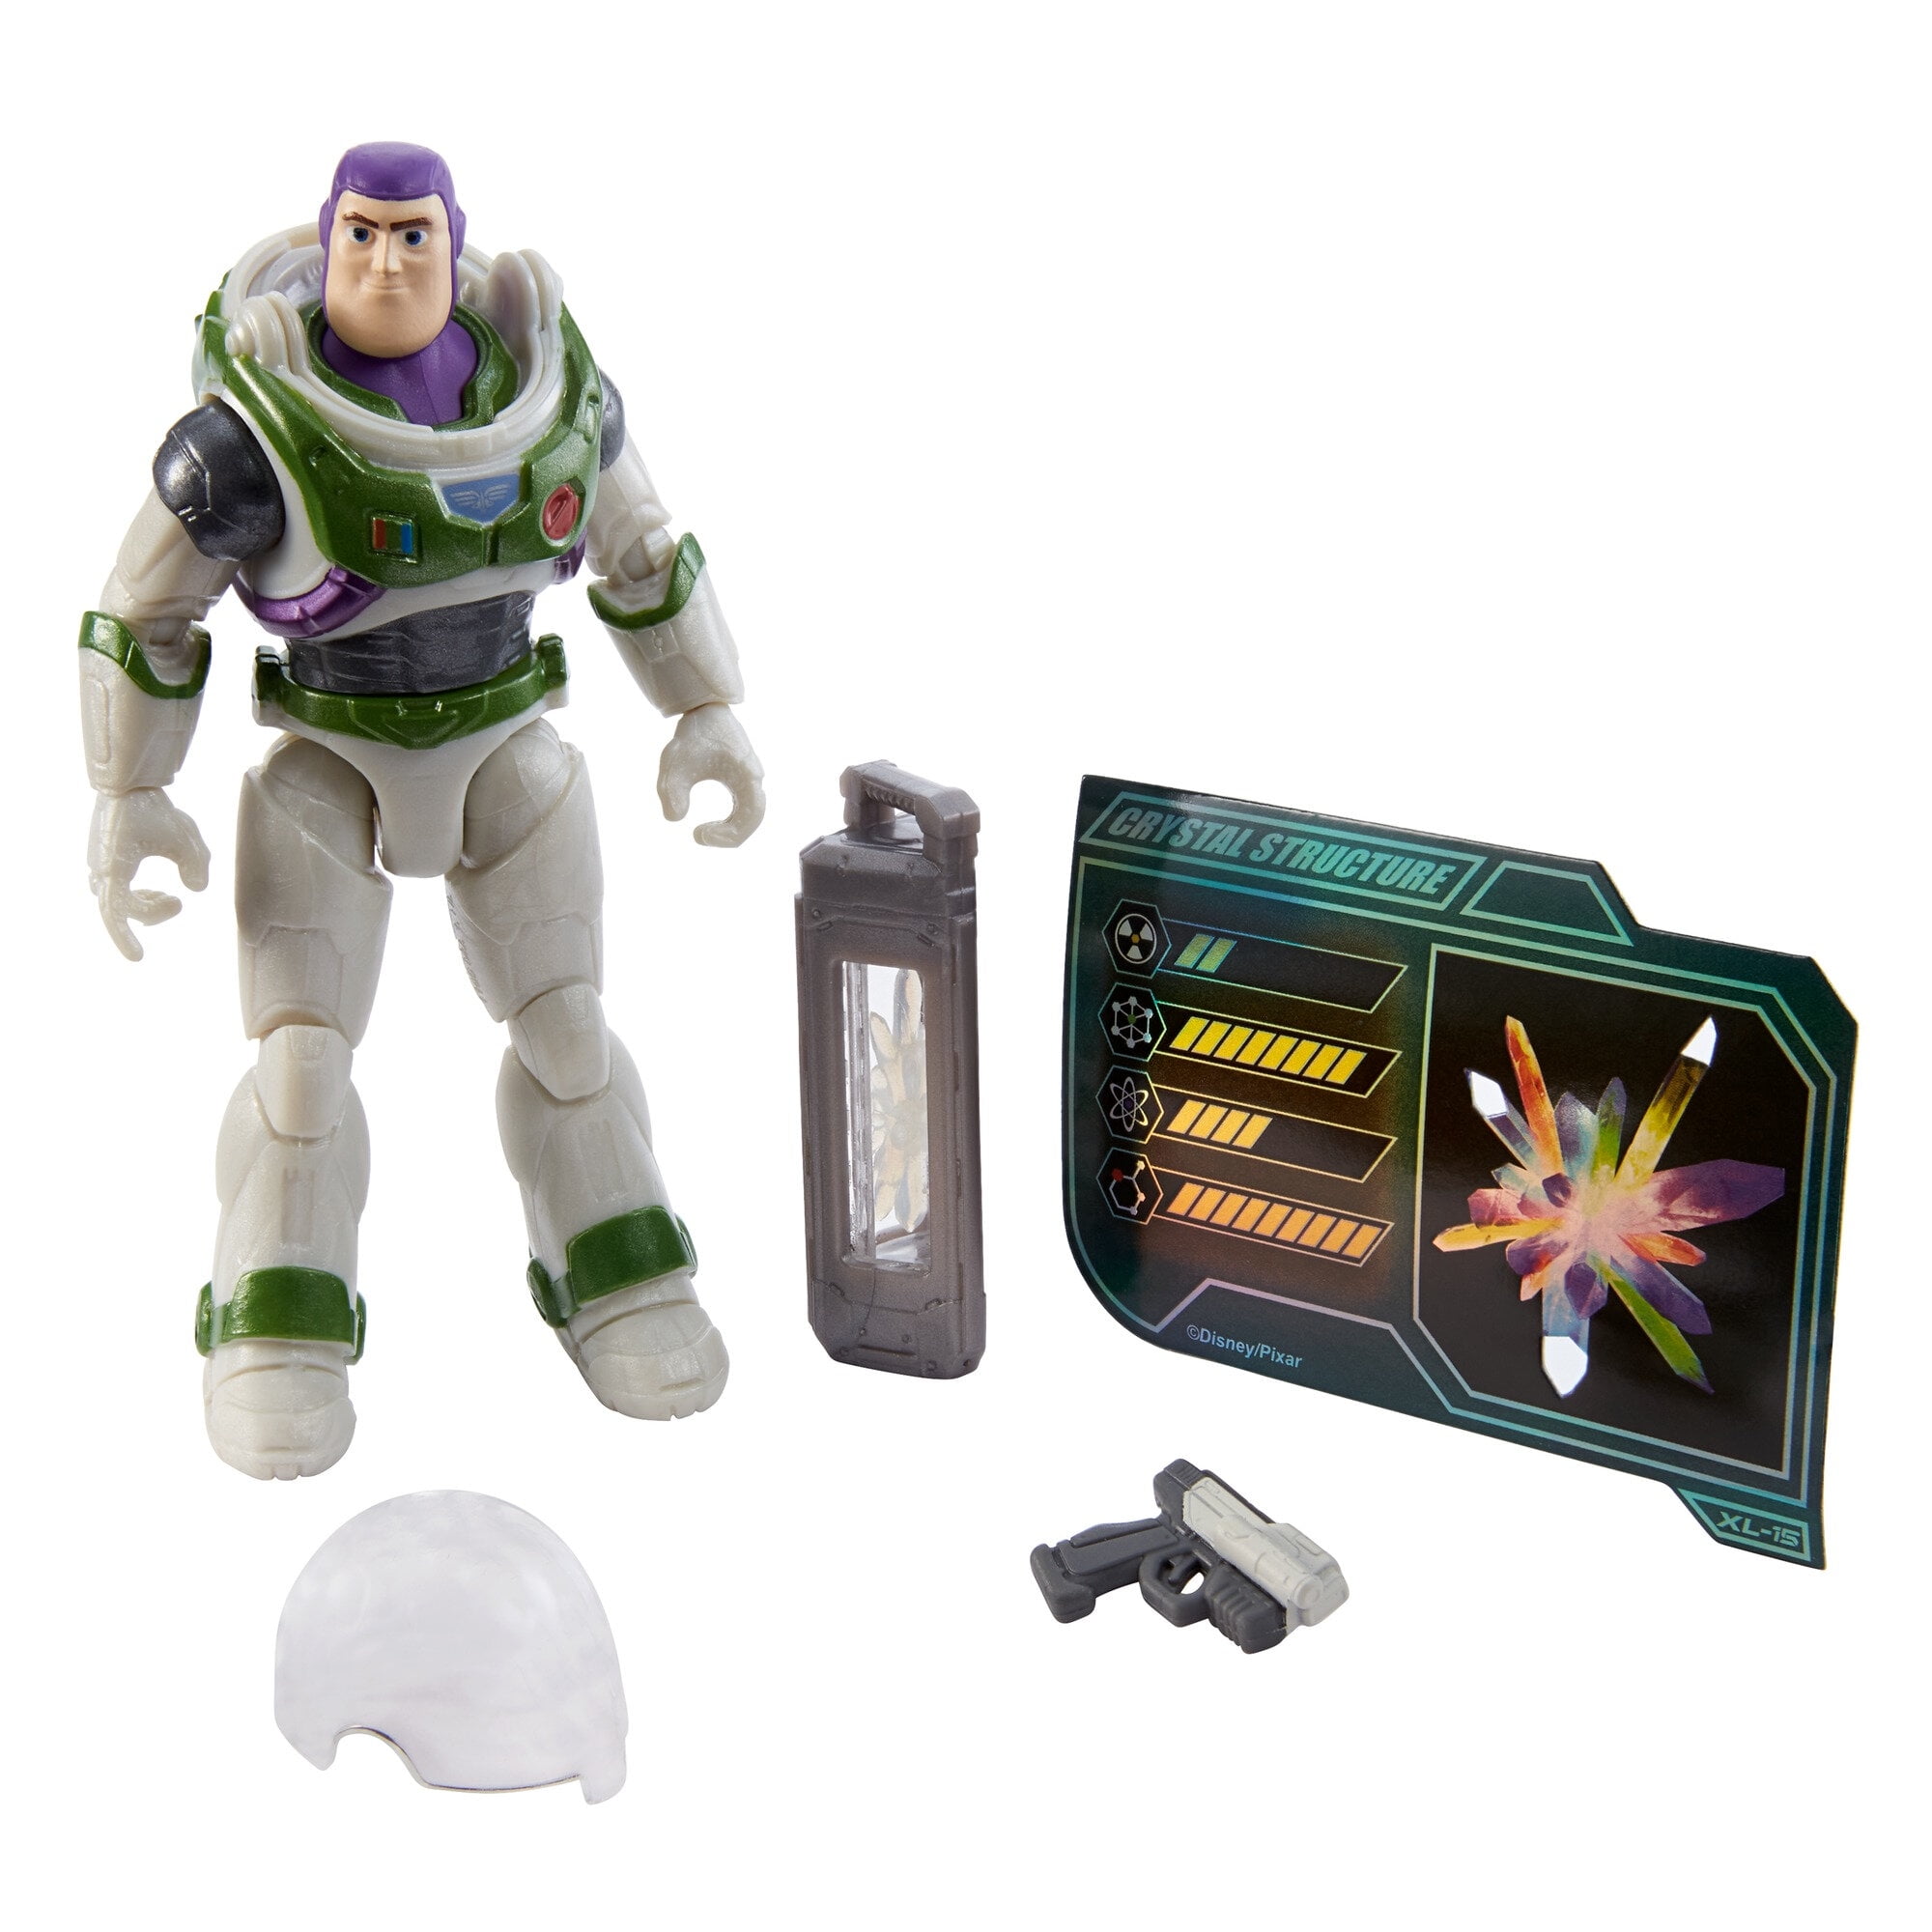 Disney and Pixar Crystal Space Alpha Action Figure & Accessories, 5-in - Walmart.com